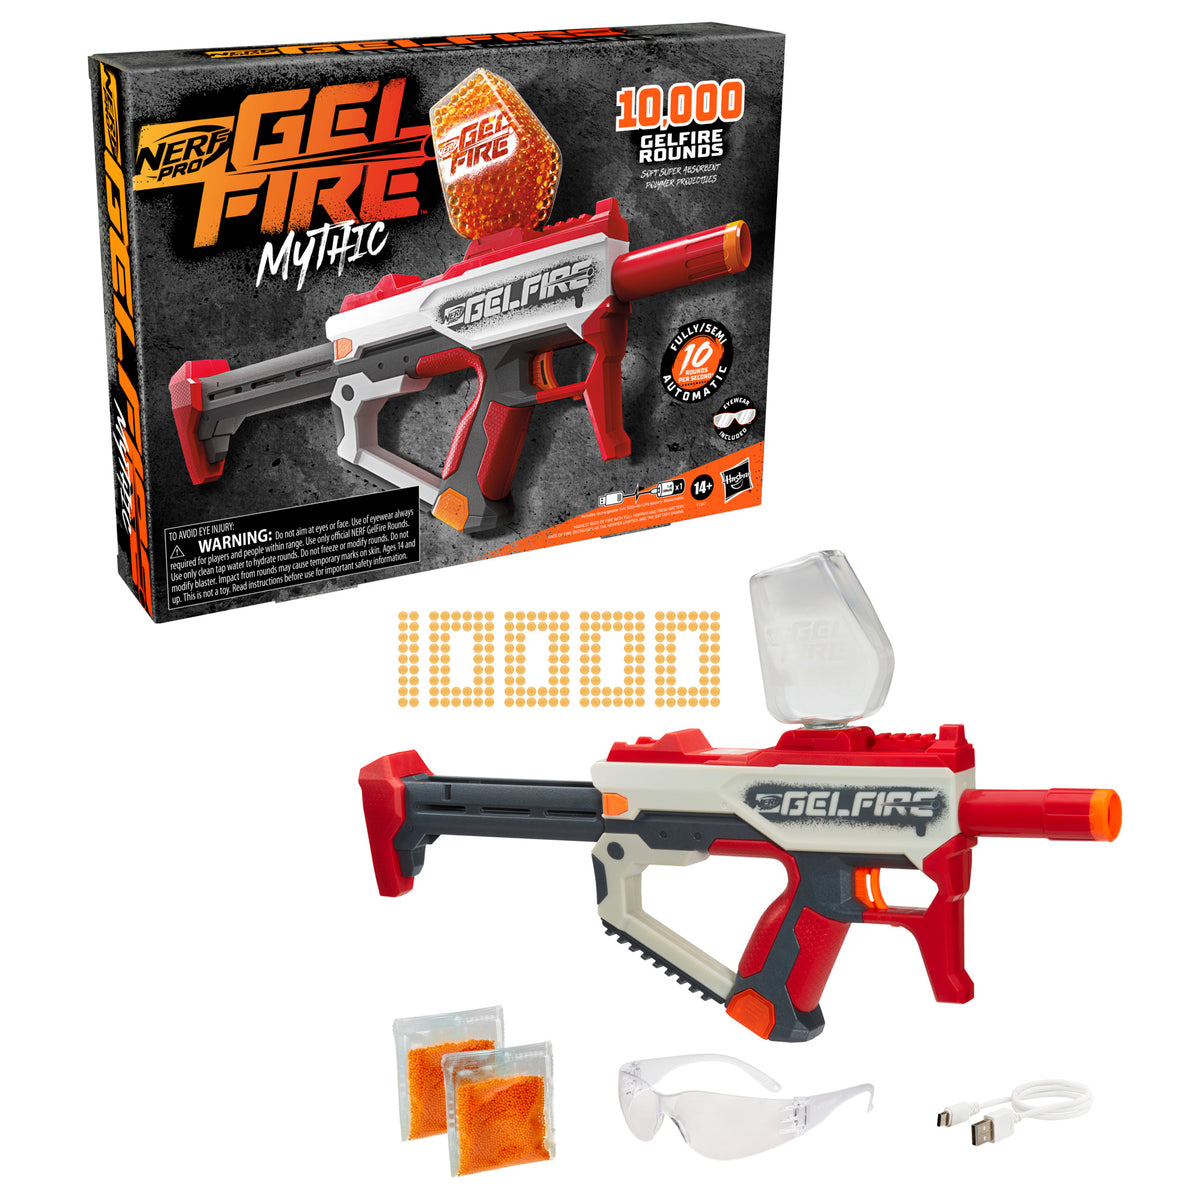 Nerf Pro Gelfire Full Auto Gel Blaster Rifle (Model: Mythic), MORE